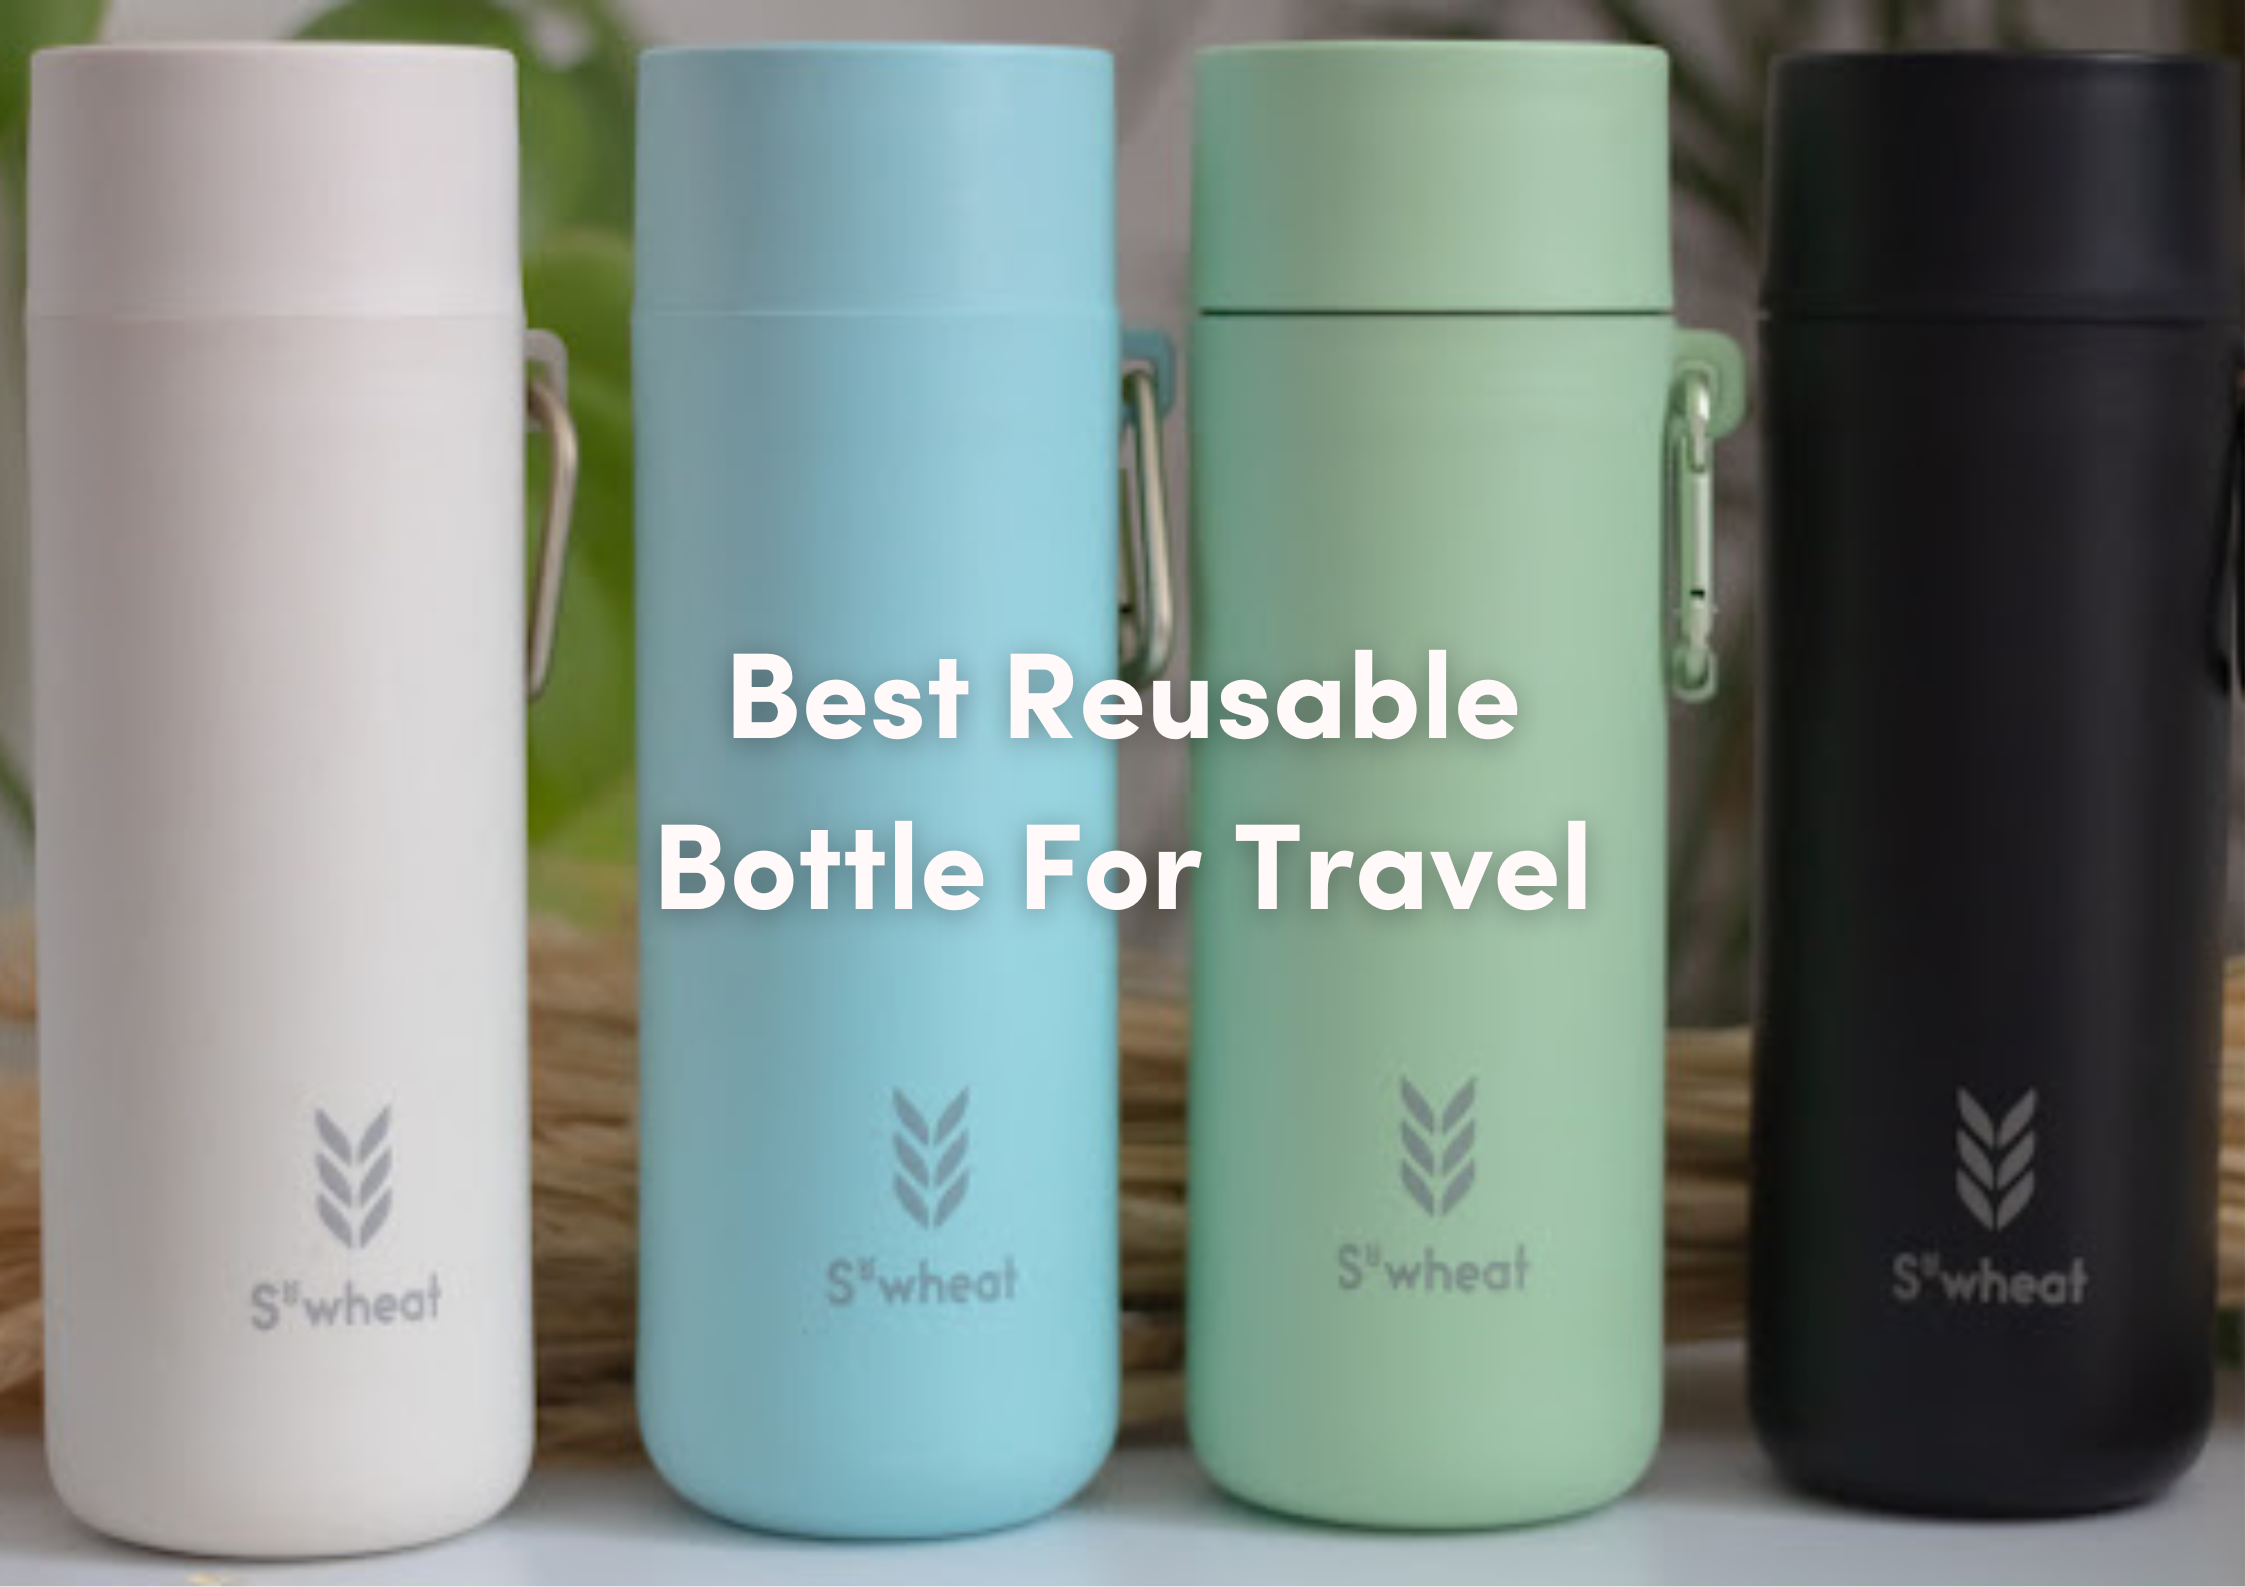 Best Reusable Water Bottle For Travel – S'wheat